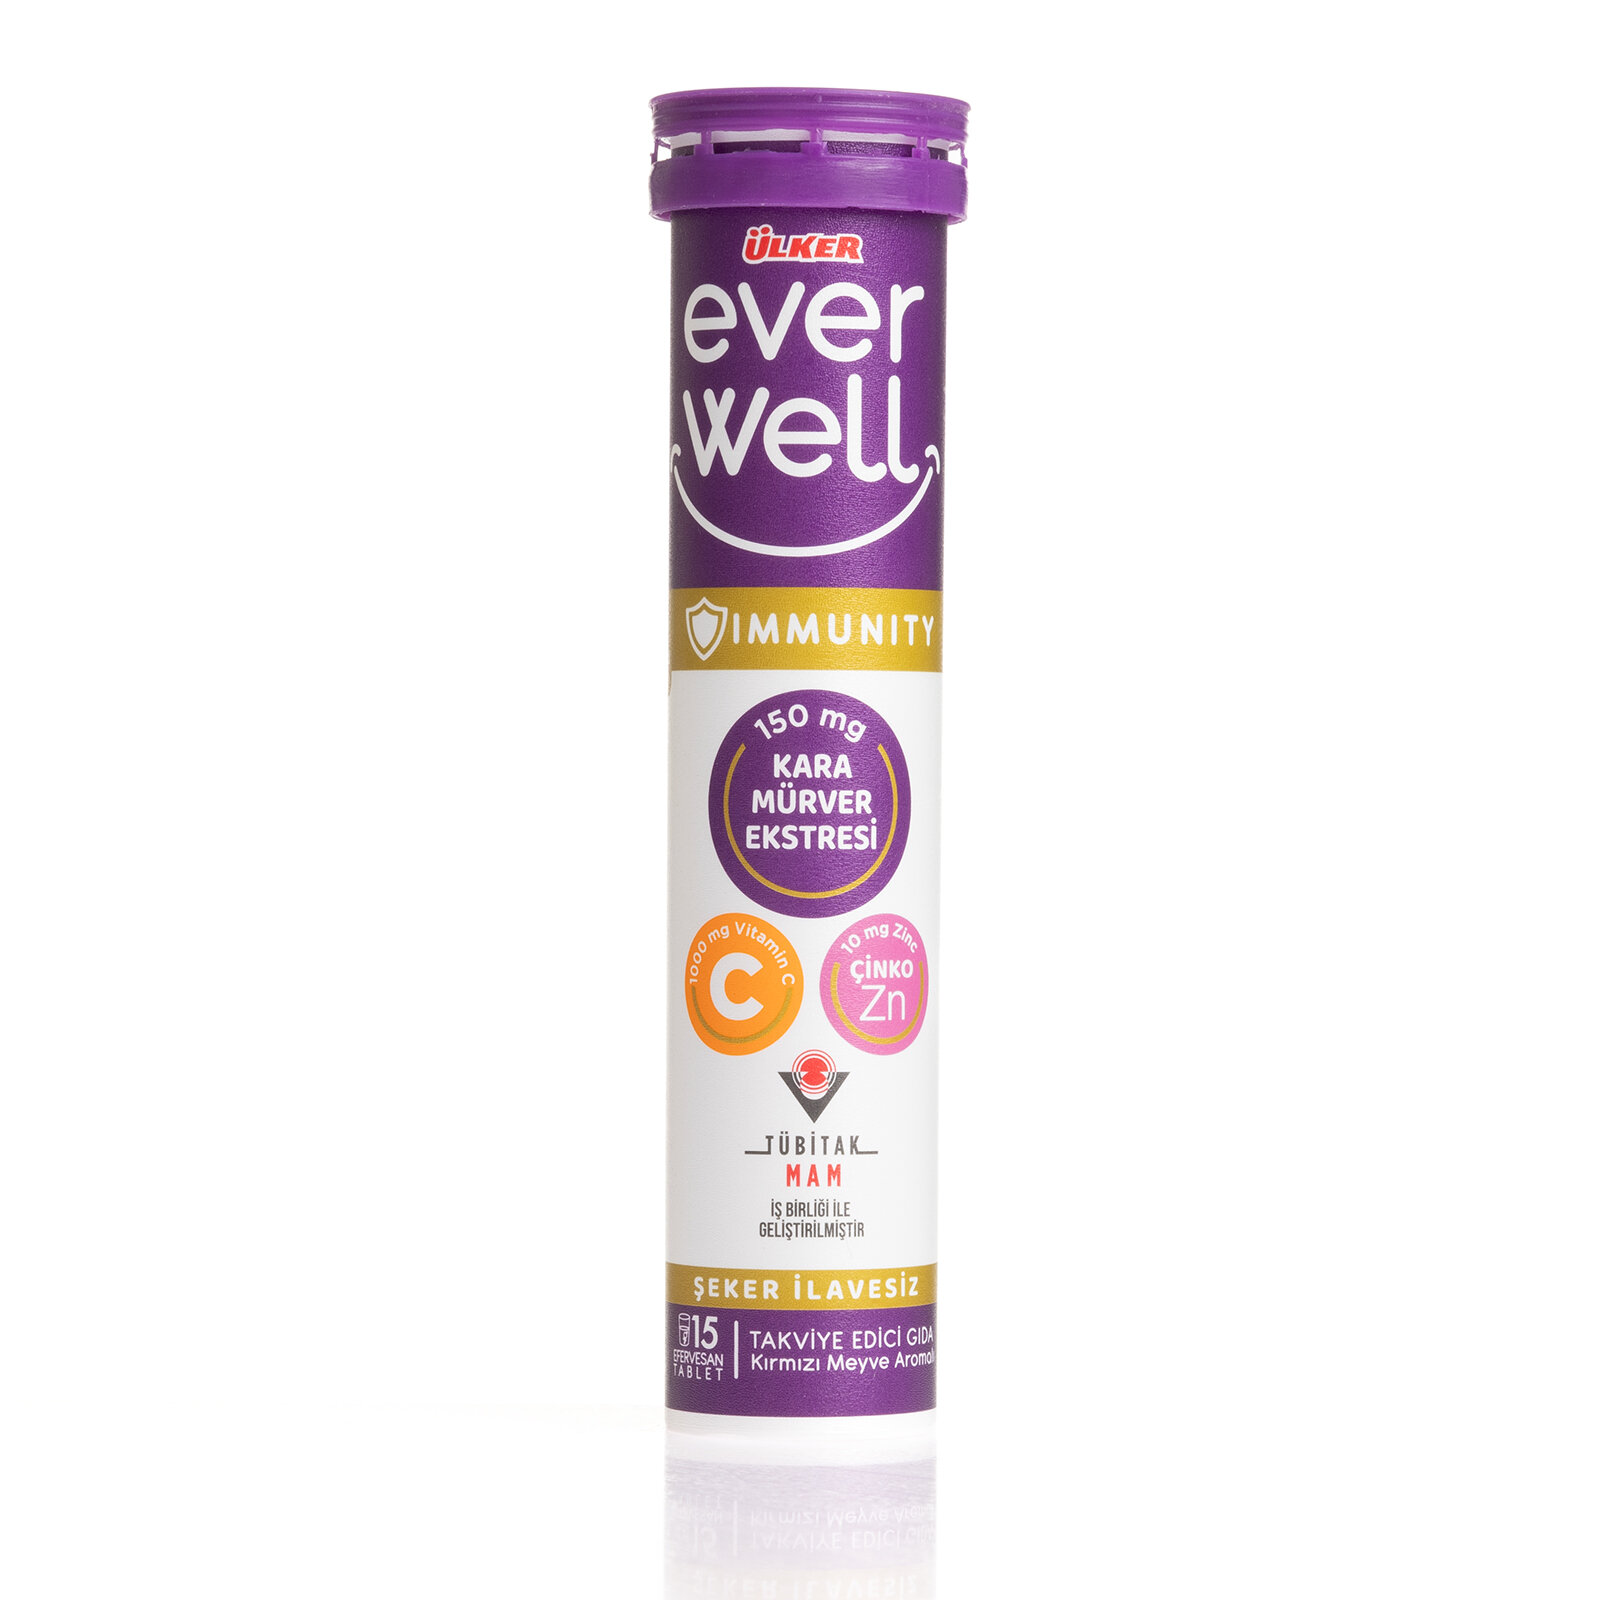 Everwell Kara Mürver Vitamin C, Çinko Efervesan Tablet 15 Adet